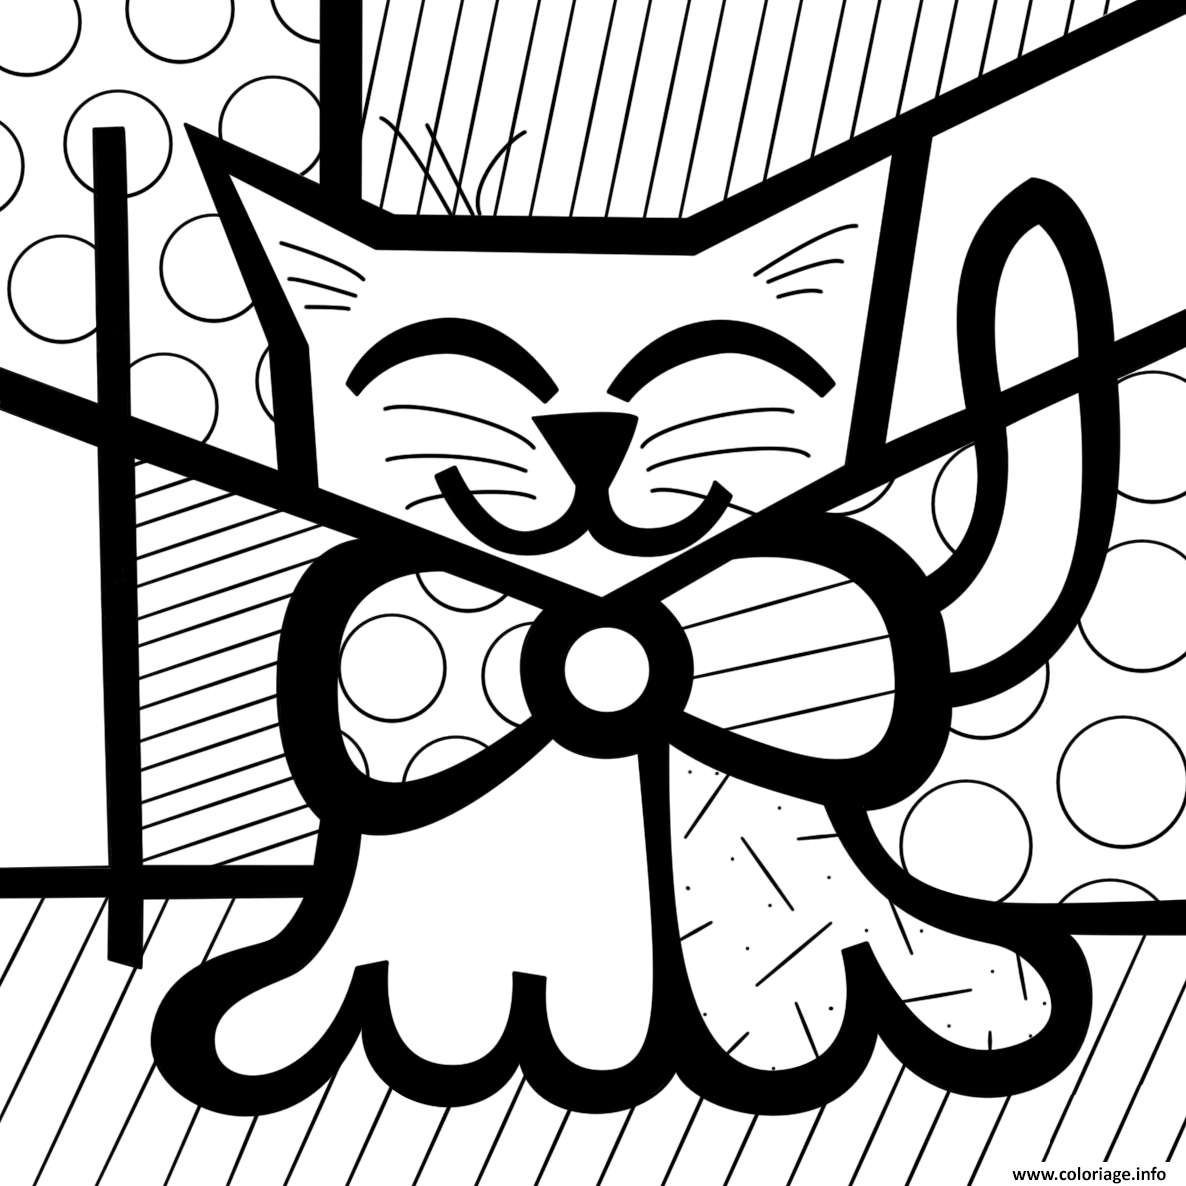 Dessin cute cat by romero britto Coloriage Gratuit à Imprimer